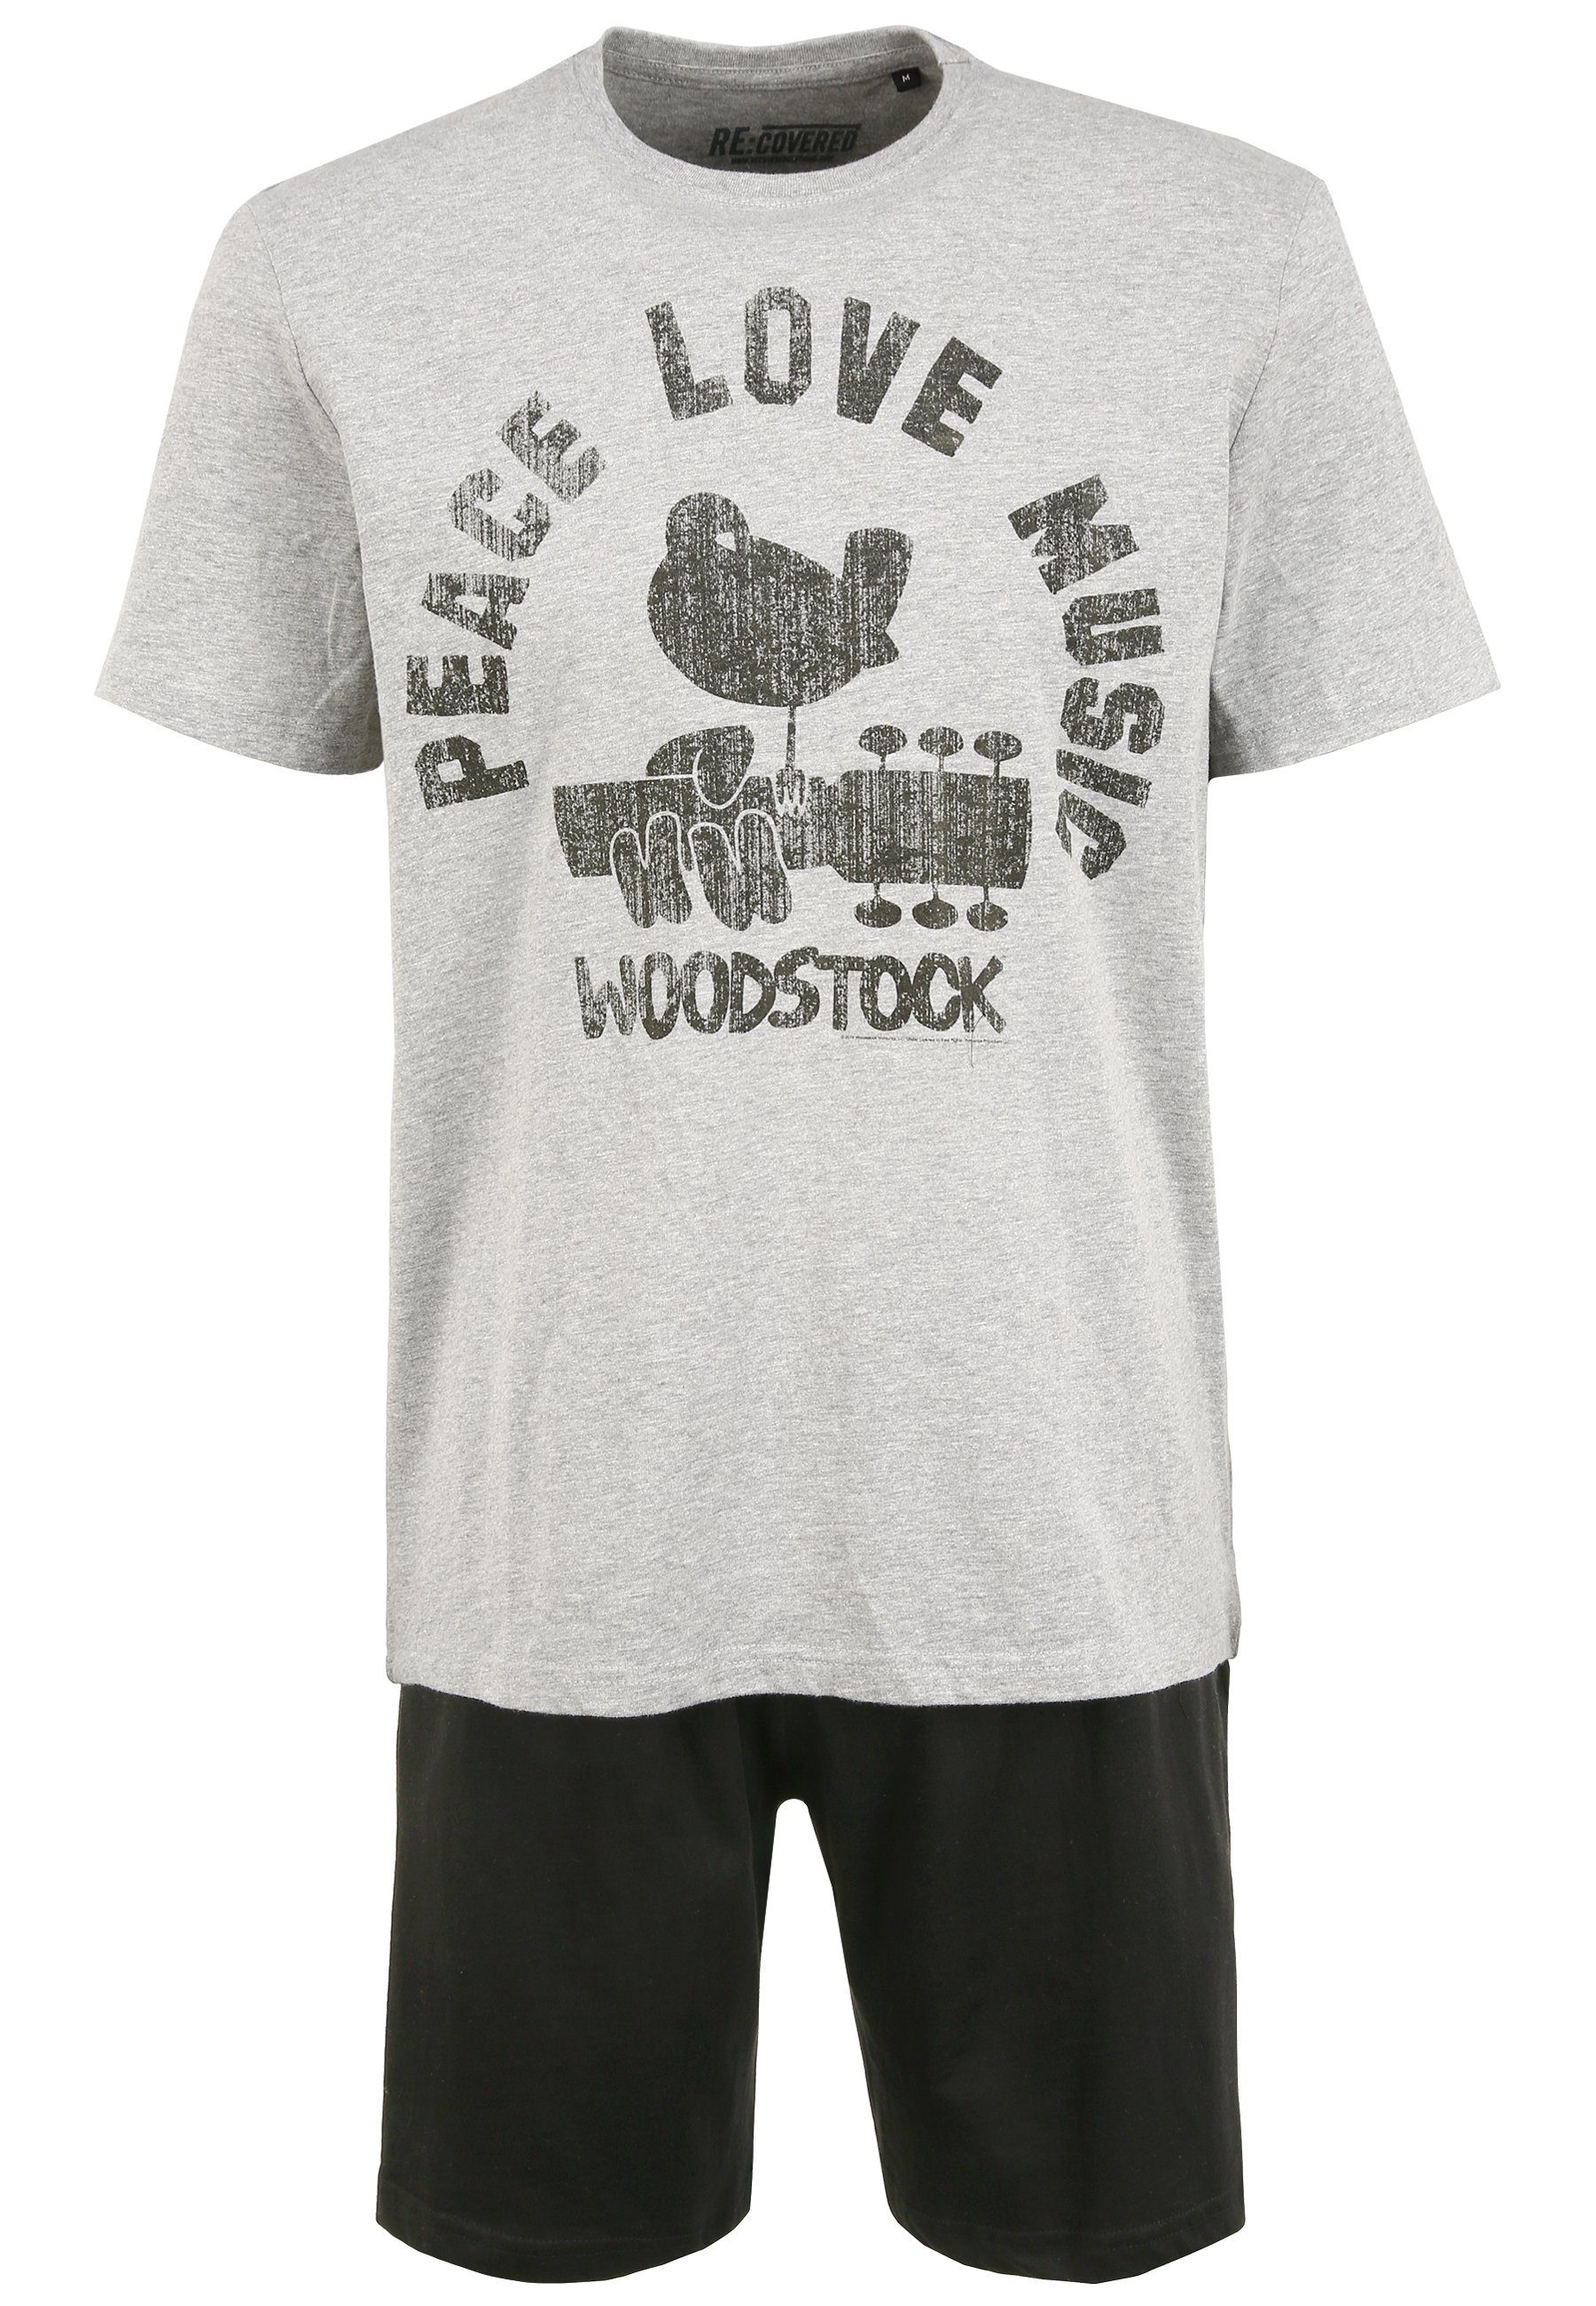 Recovered Loungepants Pyjama Lounge Set - Woodstock Peace Love Music Grey & Black